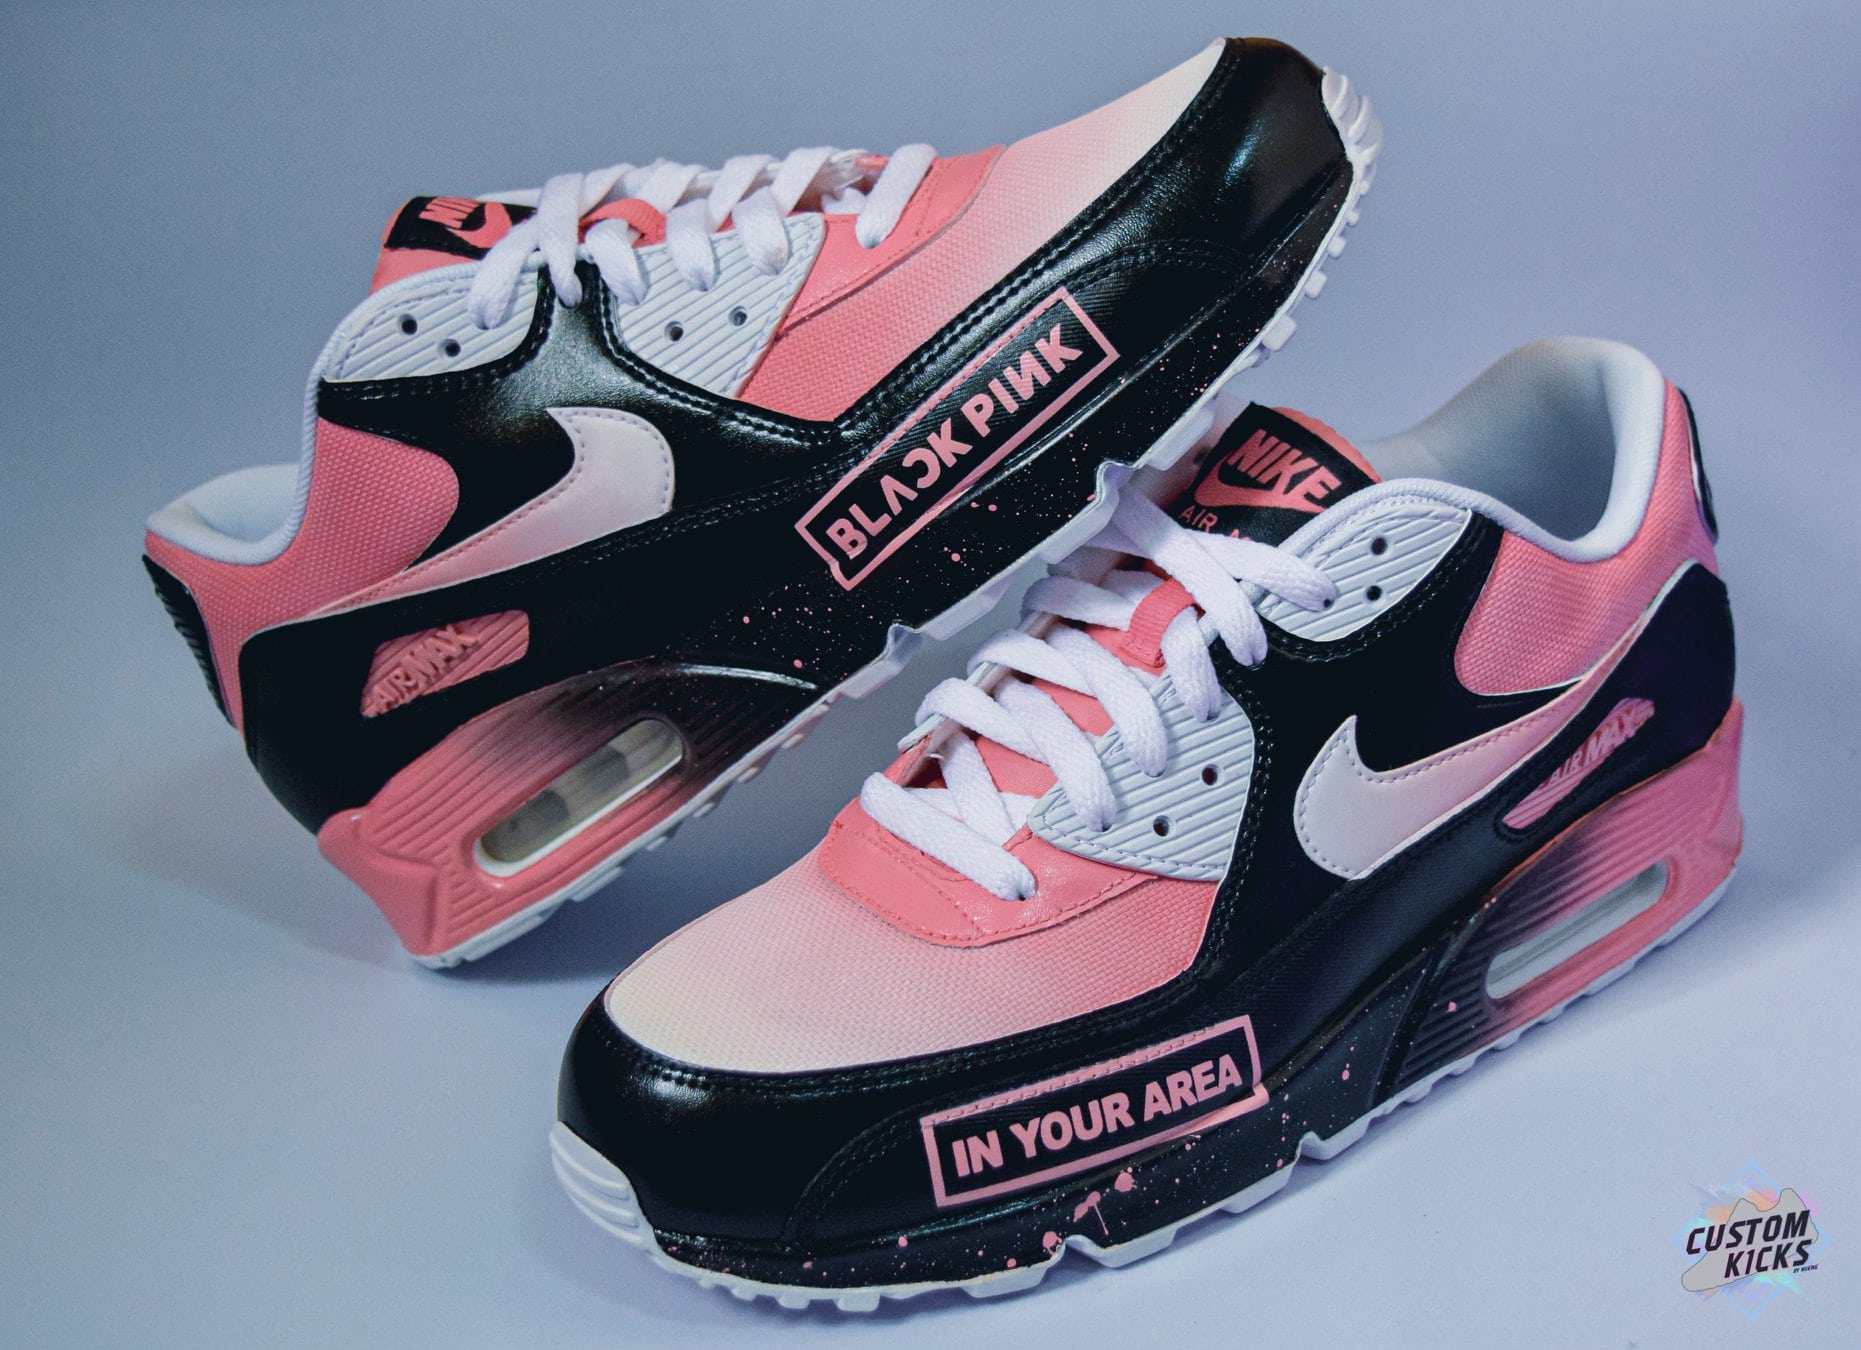 Nike Air Max 90 "Black Pink" for fans of BLACKPINK girls